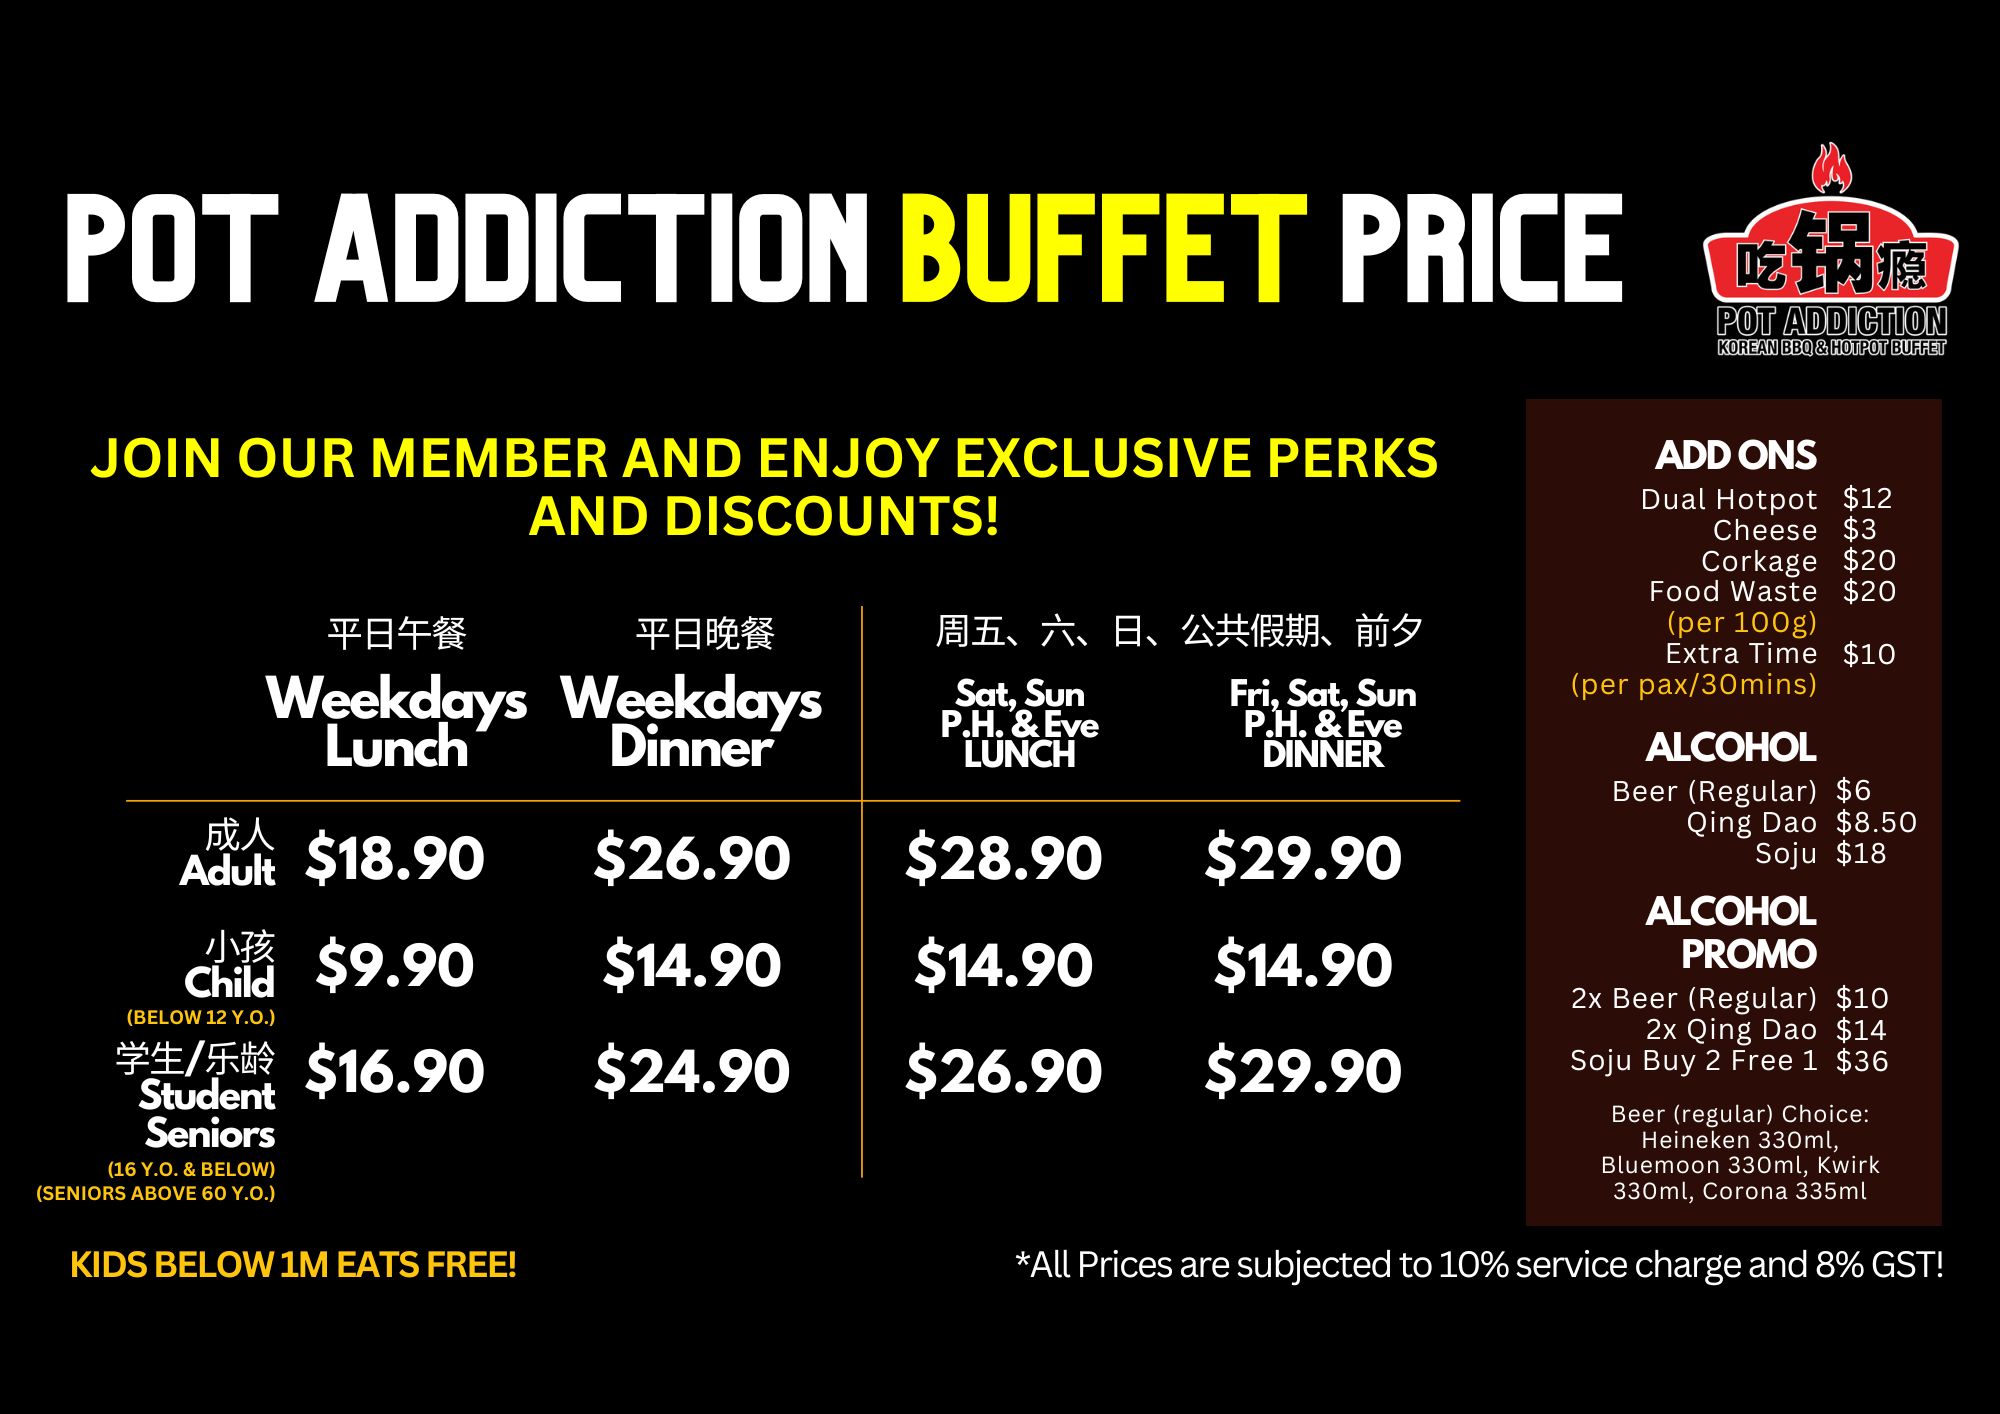 Pot addiction buffet price